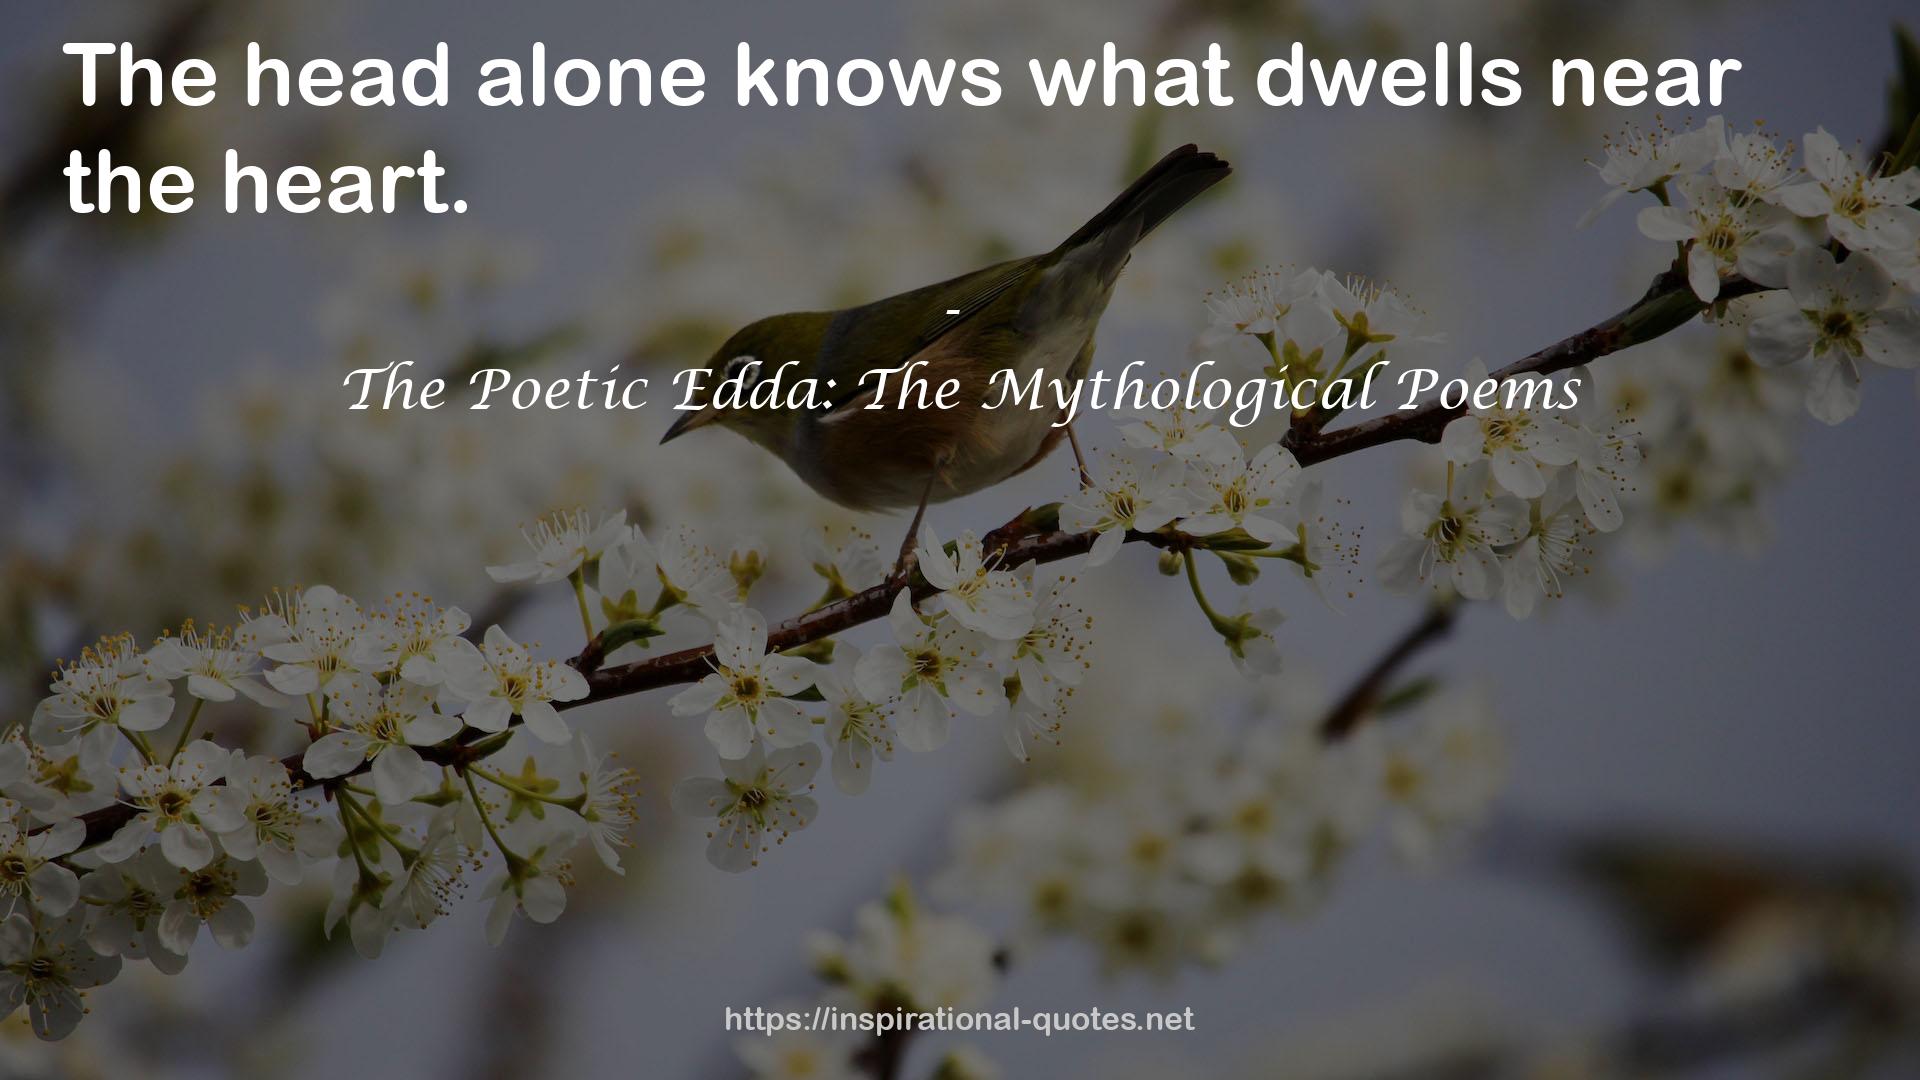 The Poetic Edda: The Mythological Poems QUOTES